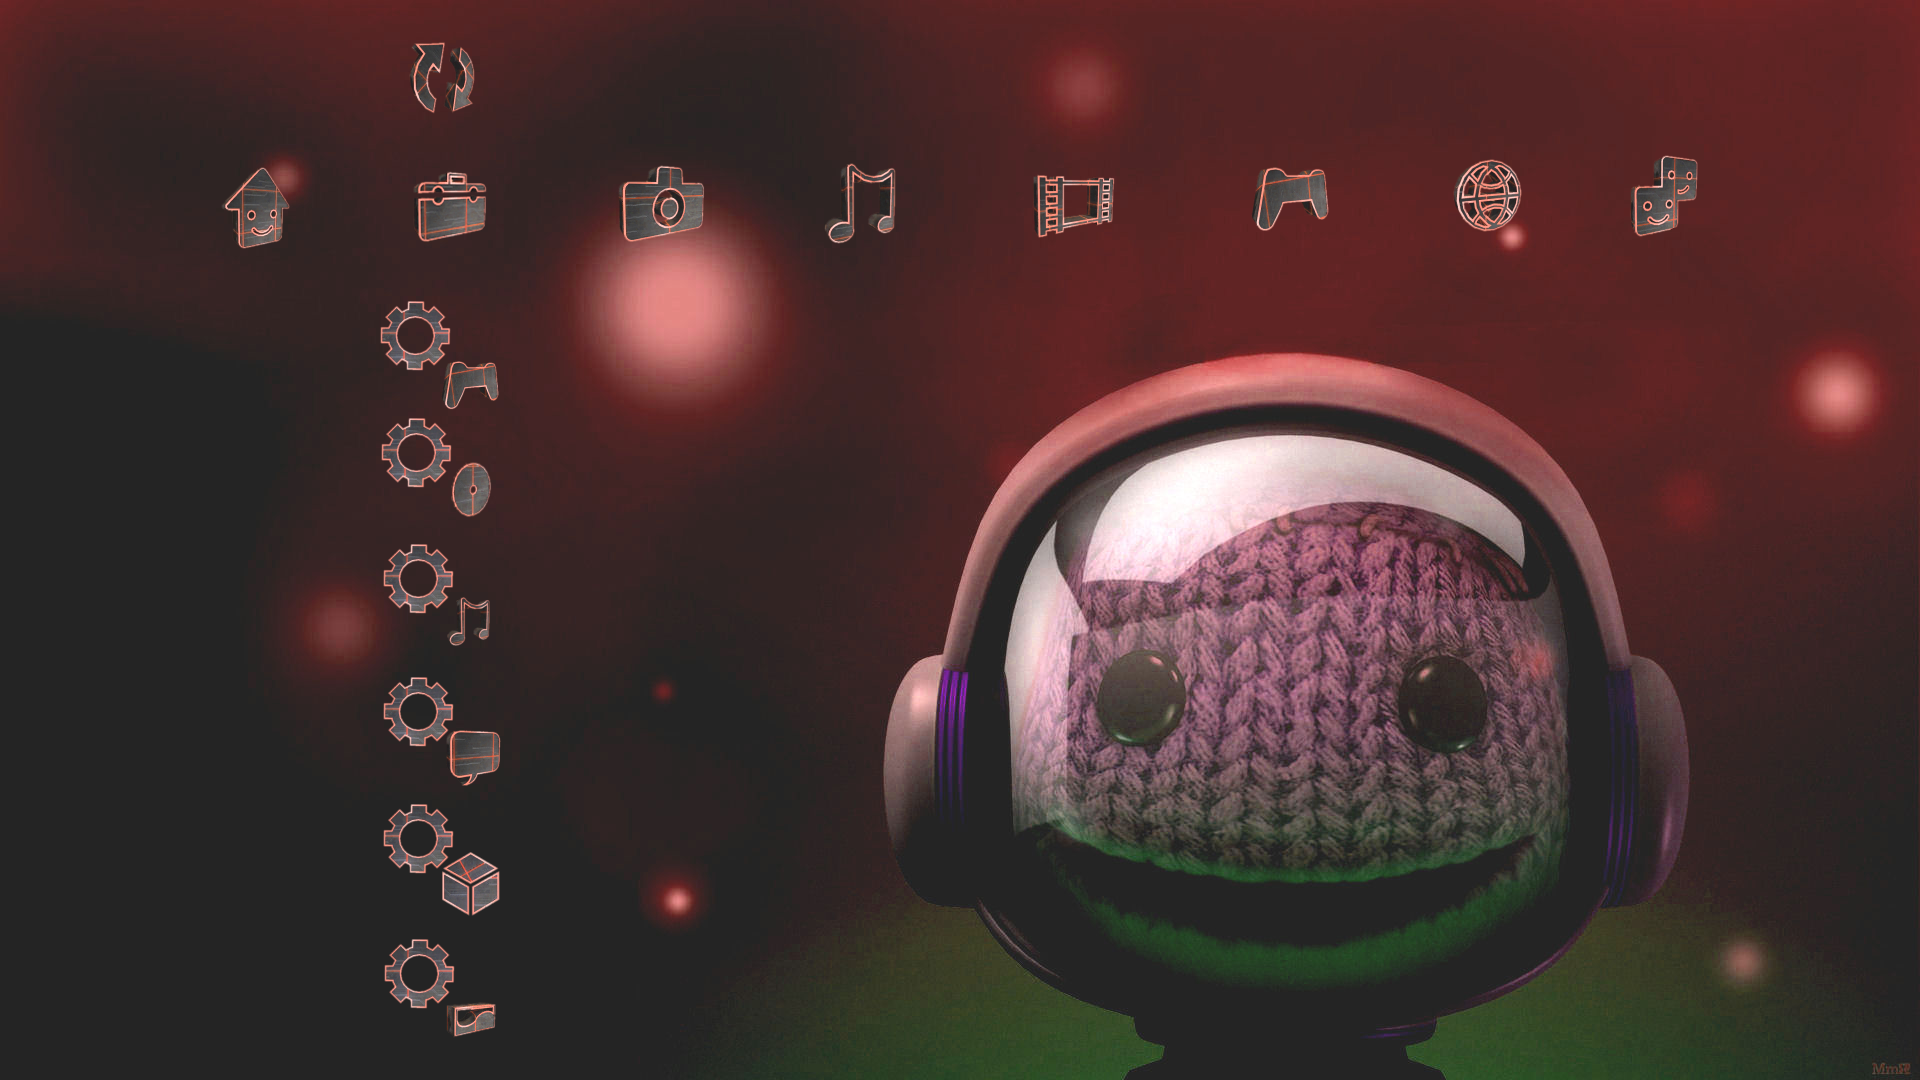 LittleBigPlanet PS3 Theme 1